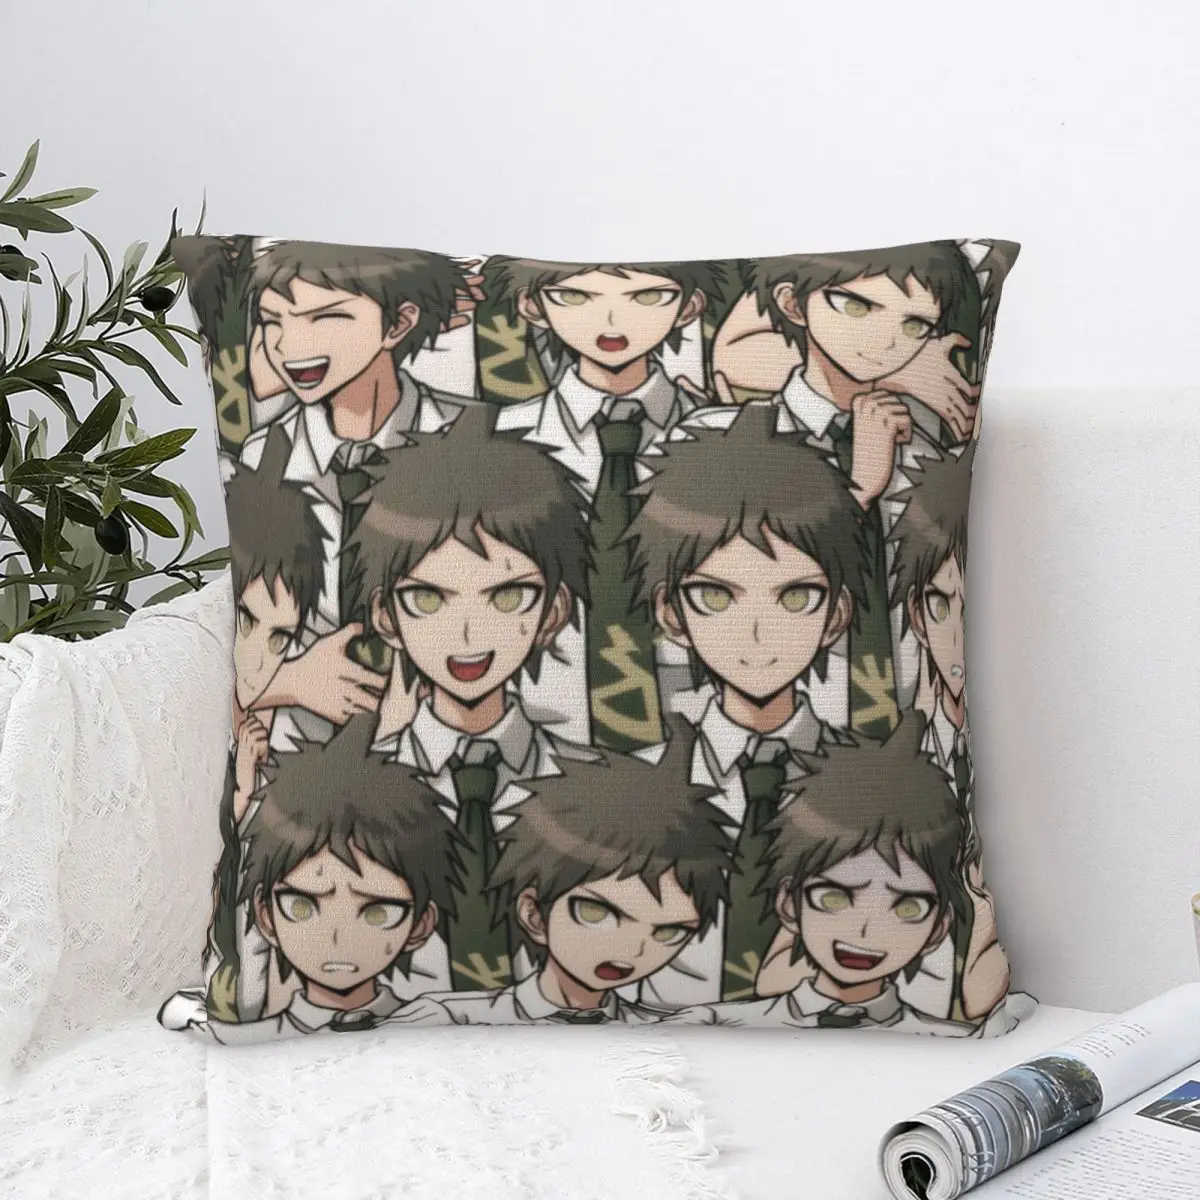 

Hajime Hinata Pillowcase Pillow Case Cushion Cover Home Sofa Car Decorative Throw Pillow Decor Square Cartoon 45*45cm